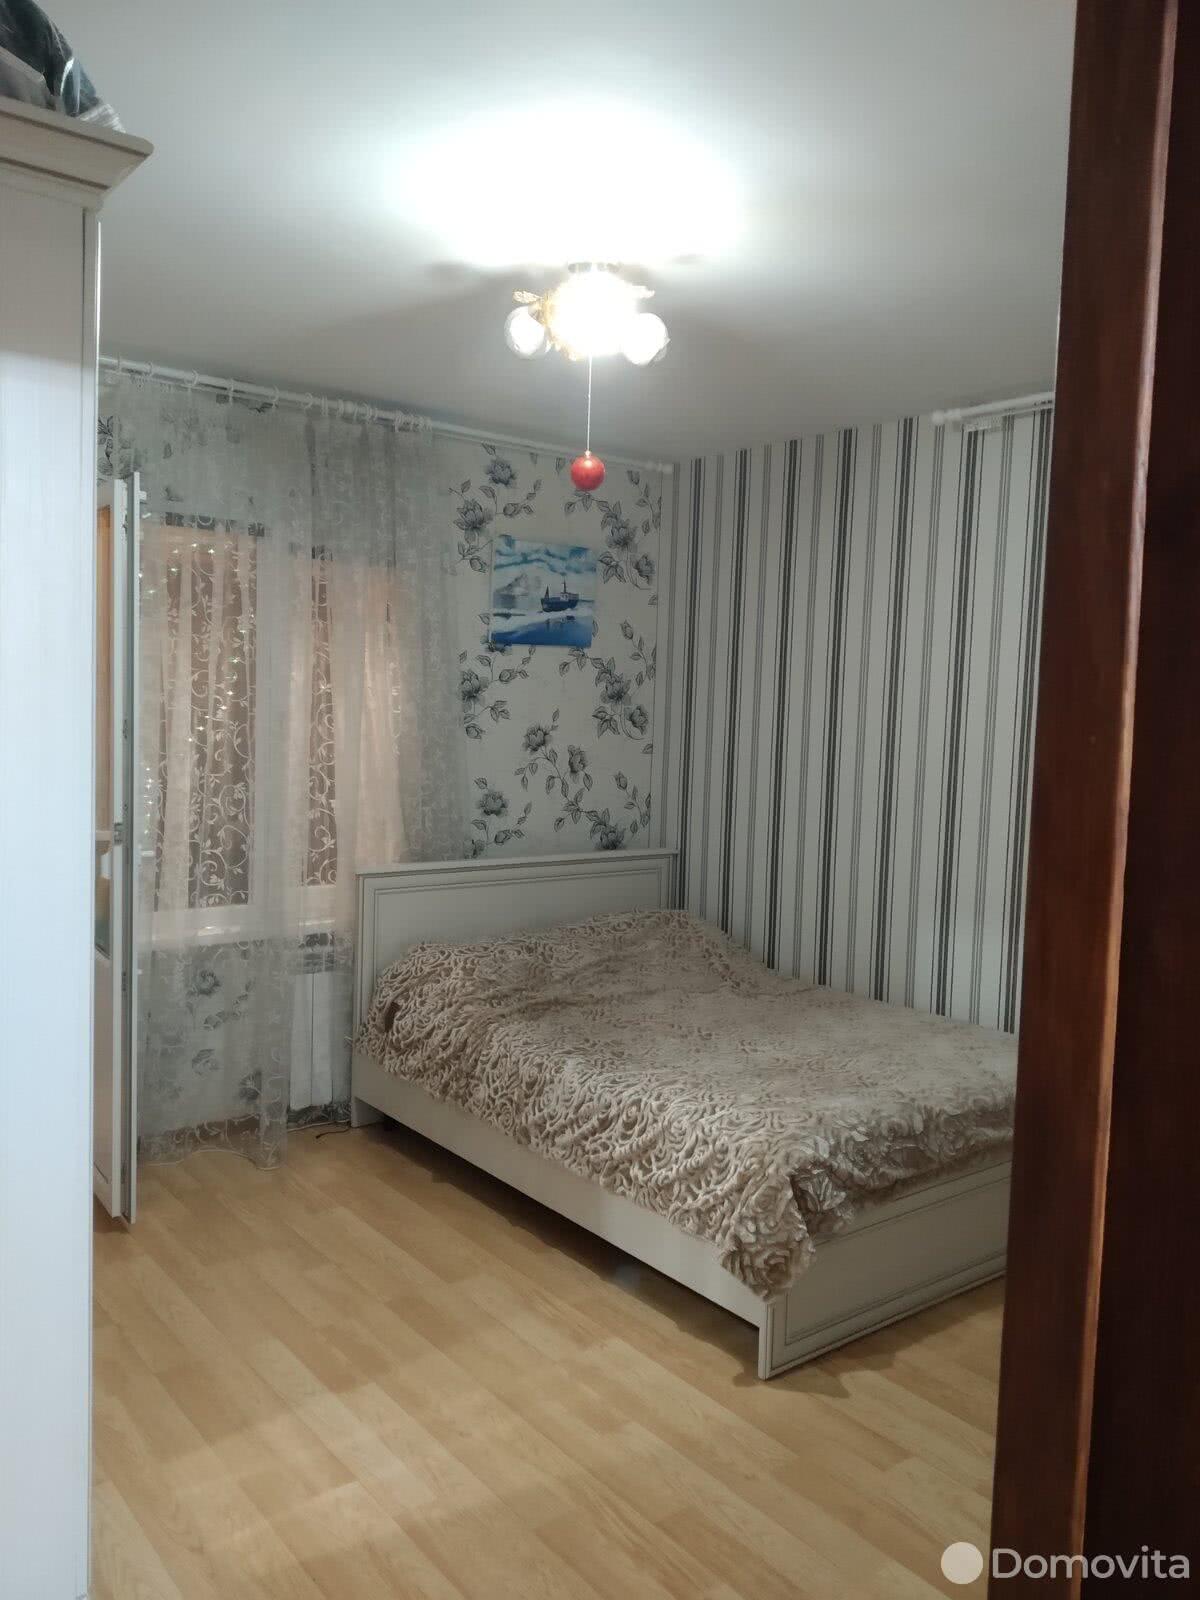 комната, Минск, ул. Карбышева, д. 9, стоимость аренды 300 р./мес.